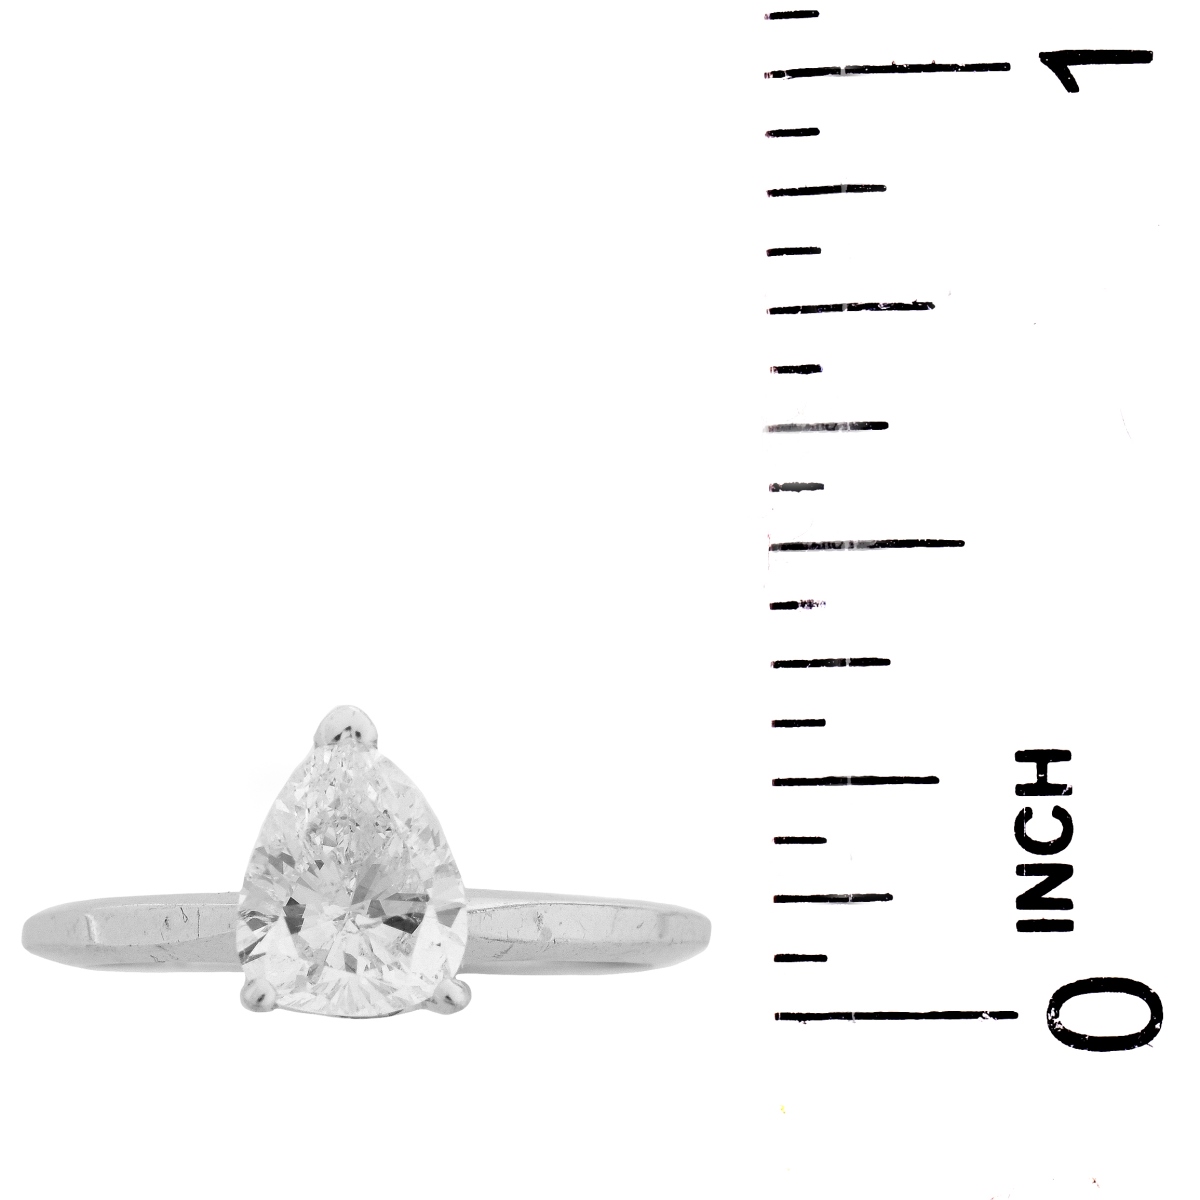 .75 Carat Diamond and 14K Ring